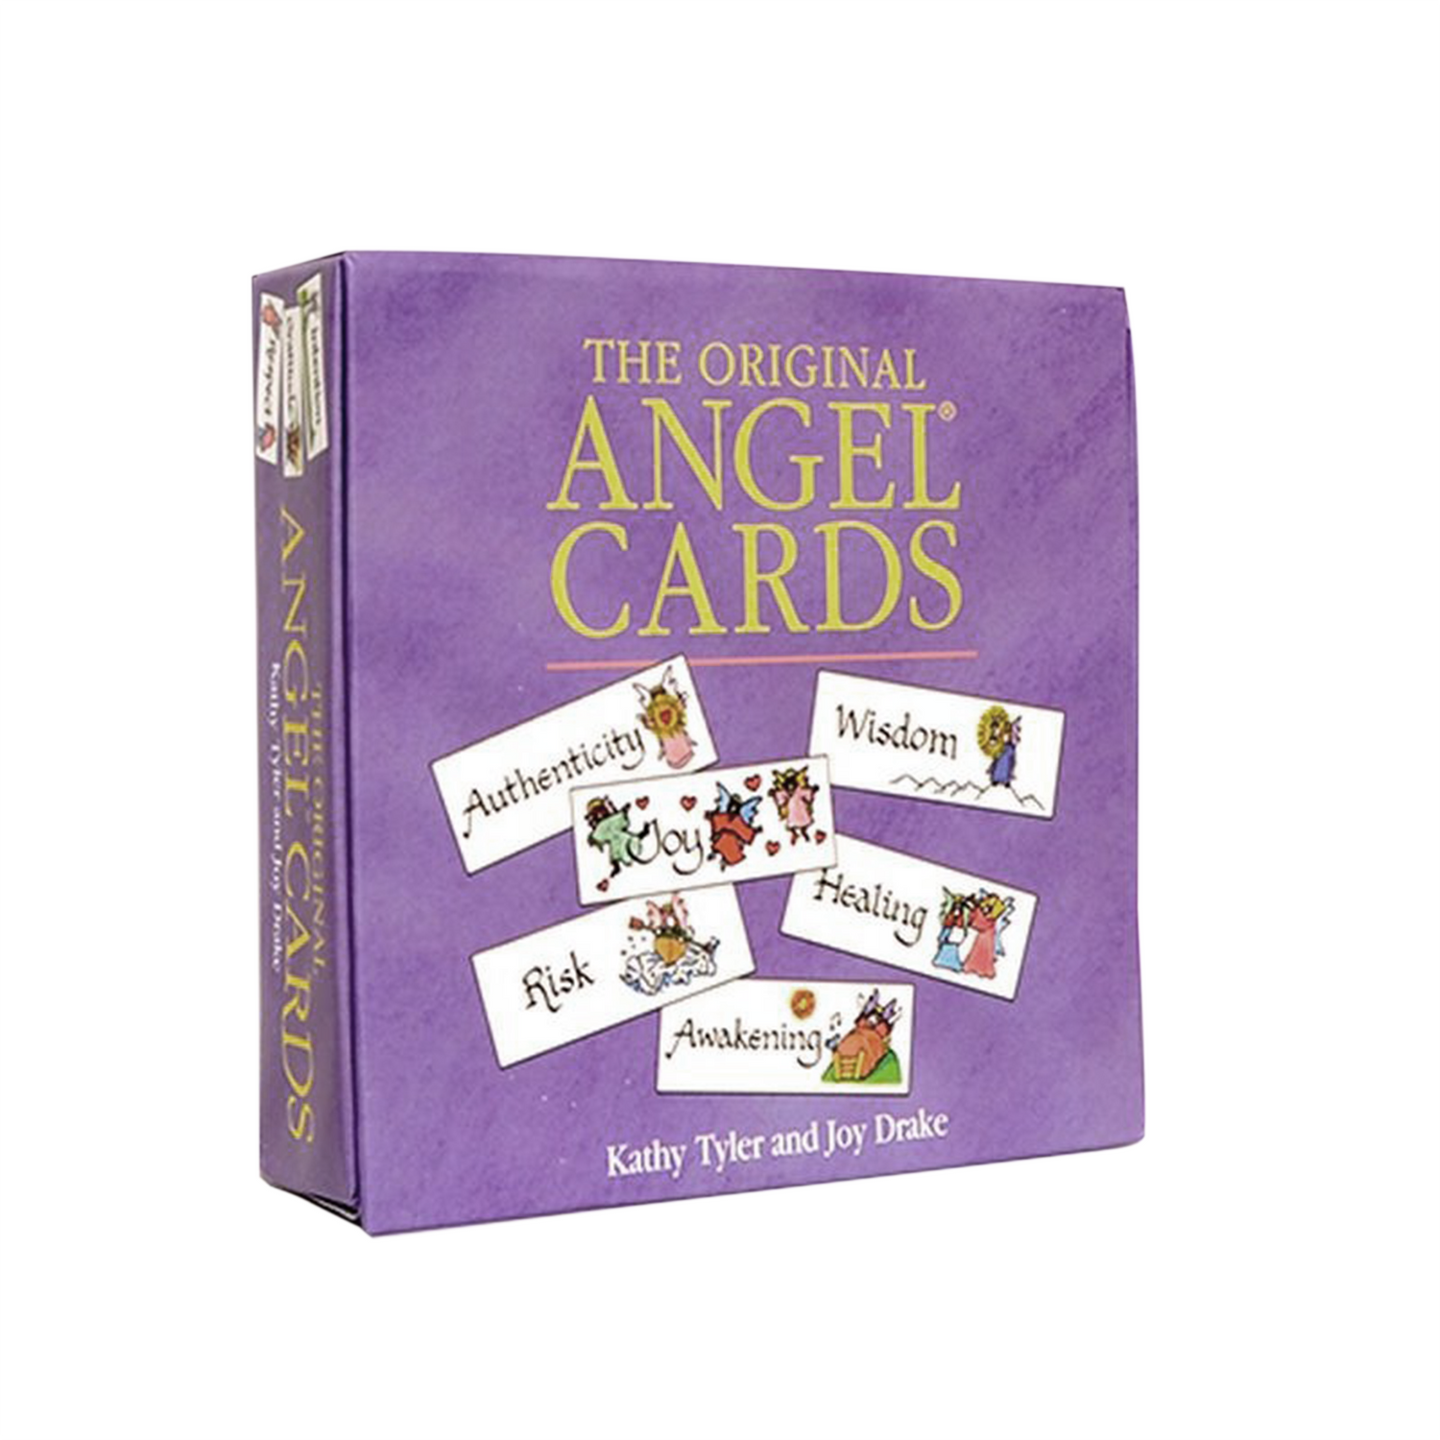 The Original Angel Cards by Kathy Tyler & Joy Drake